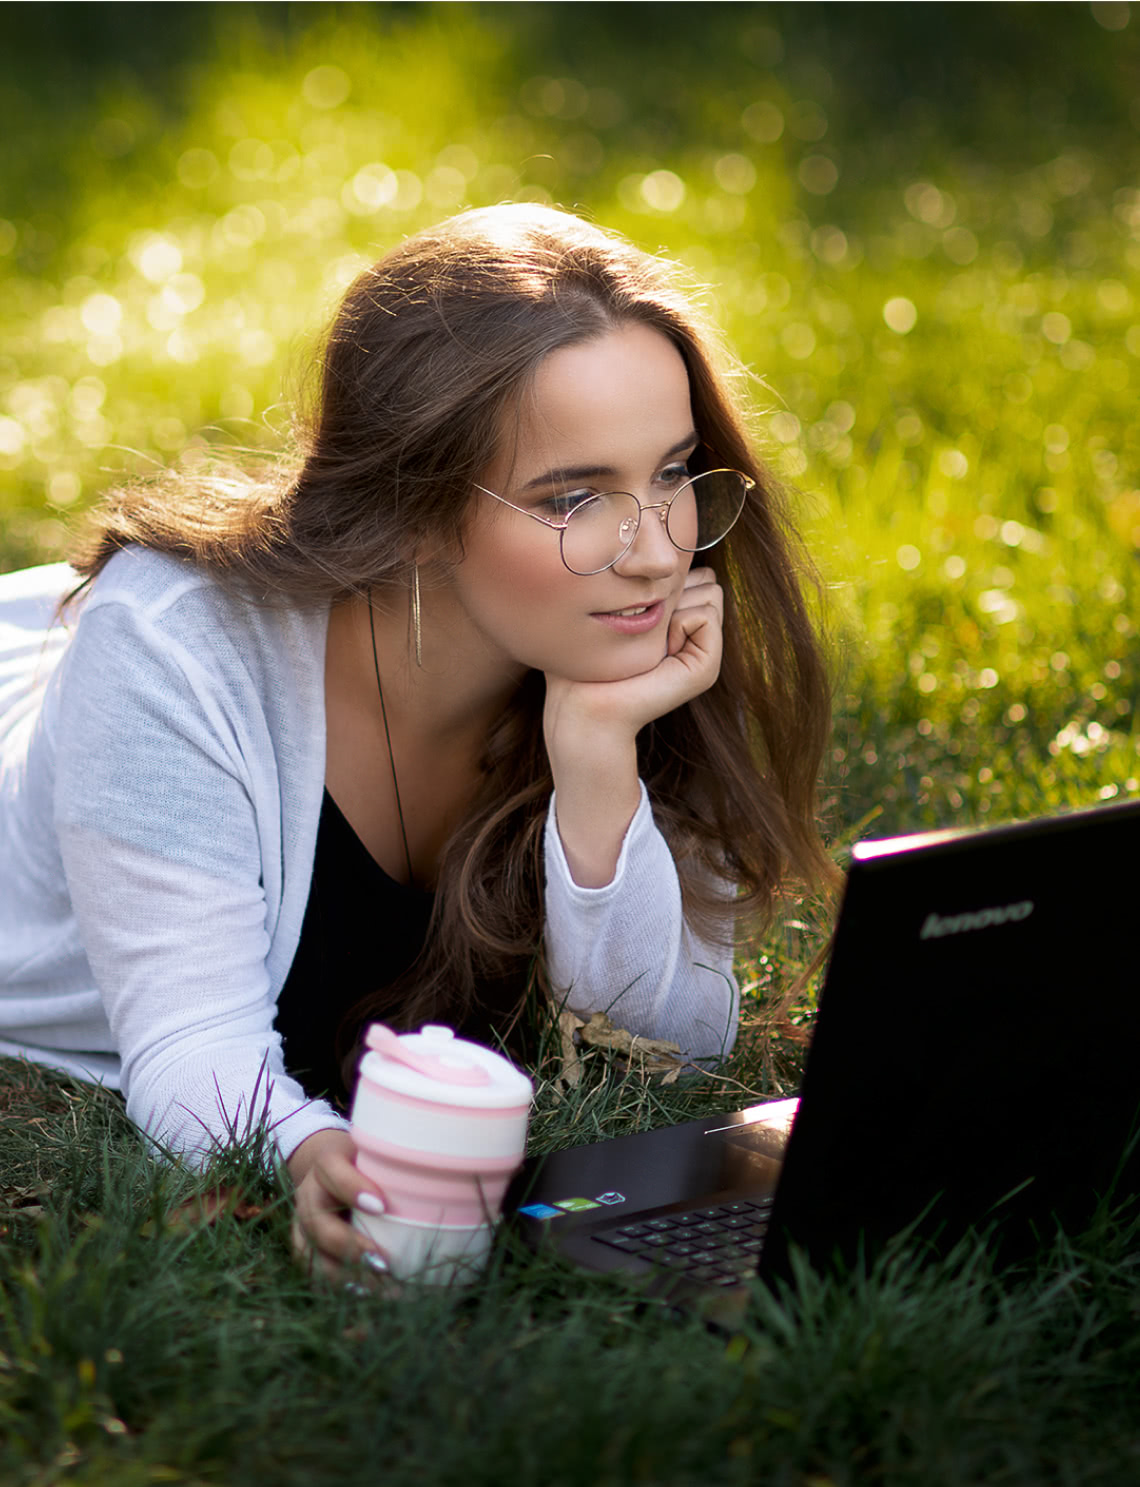 Студентка с ноутбуком в парке фото